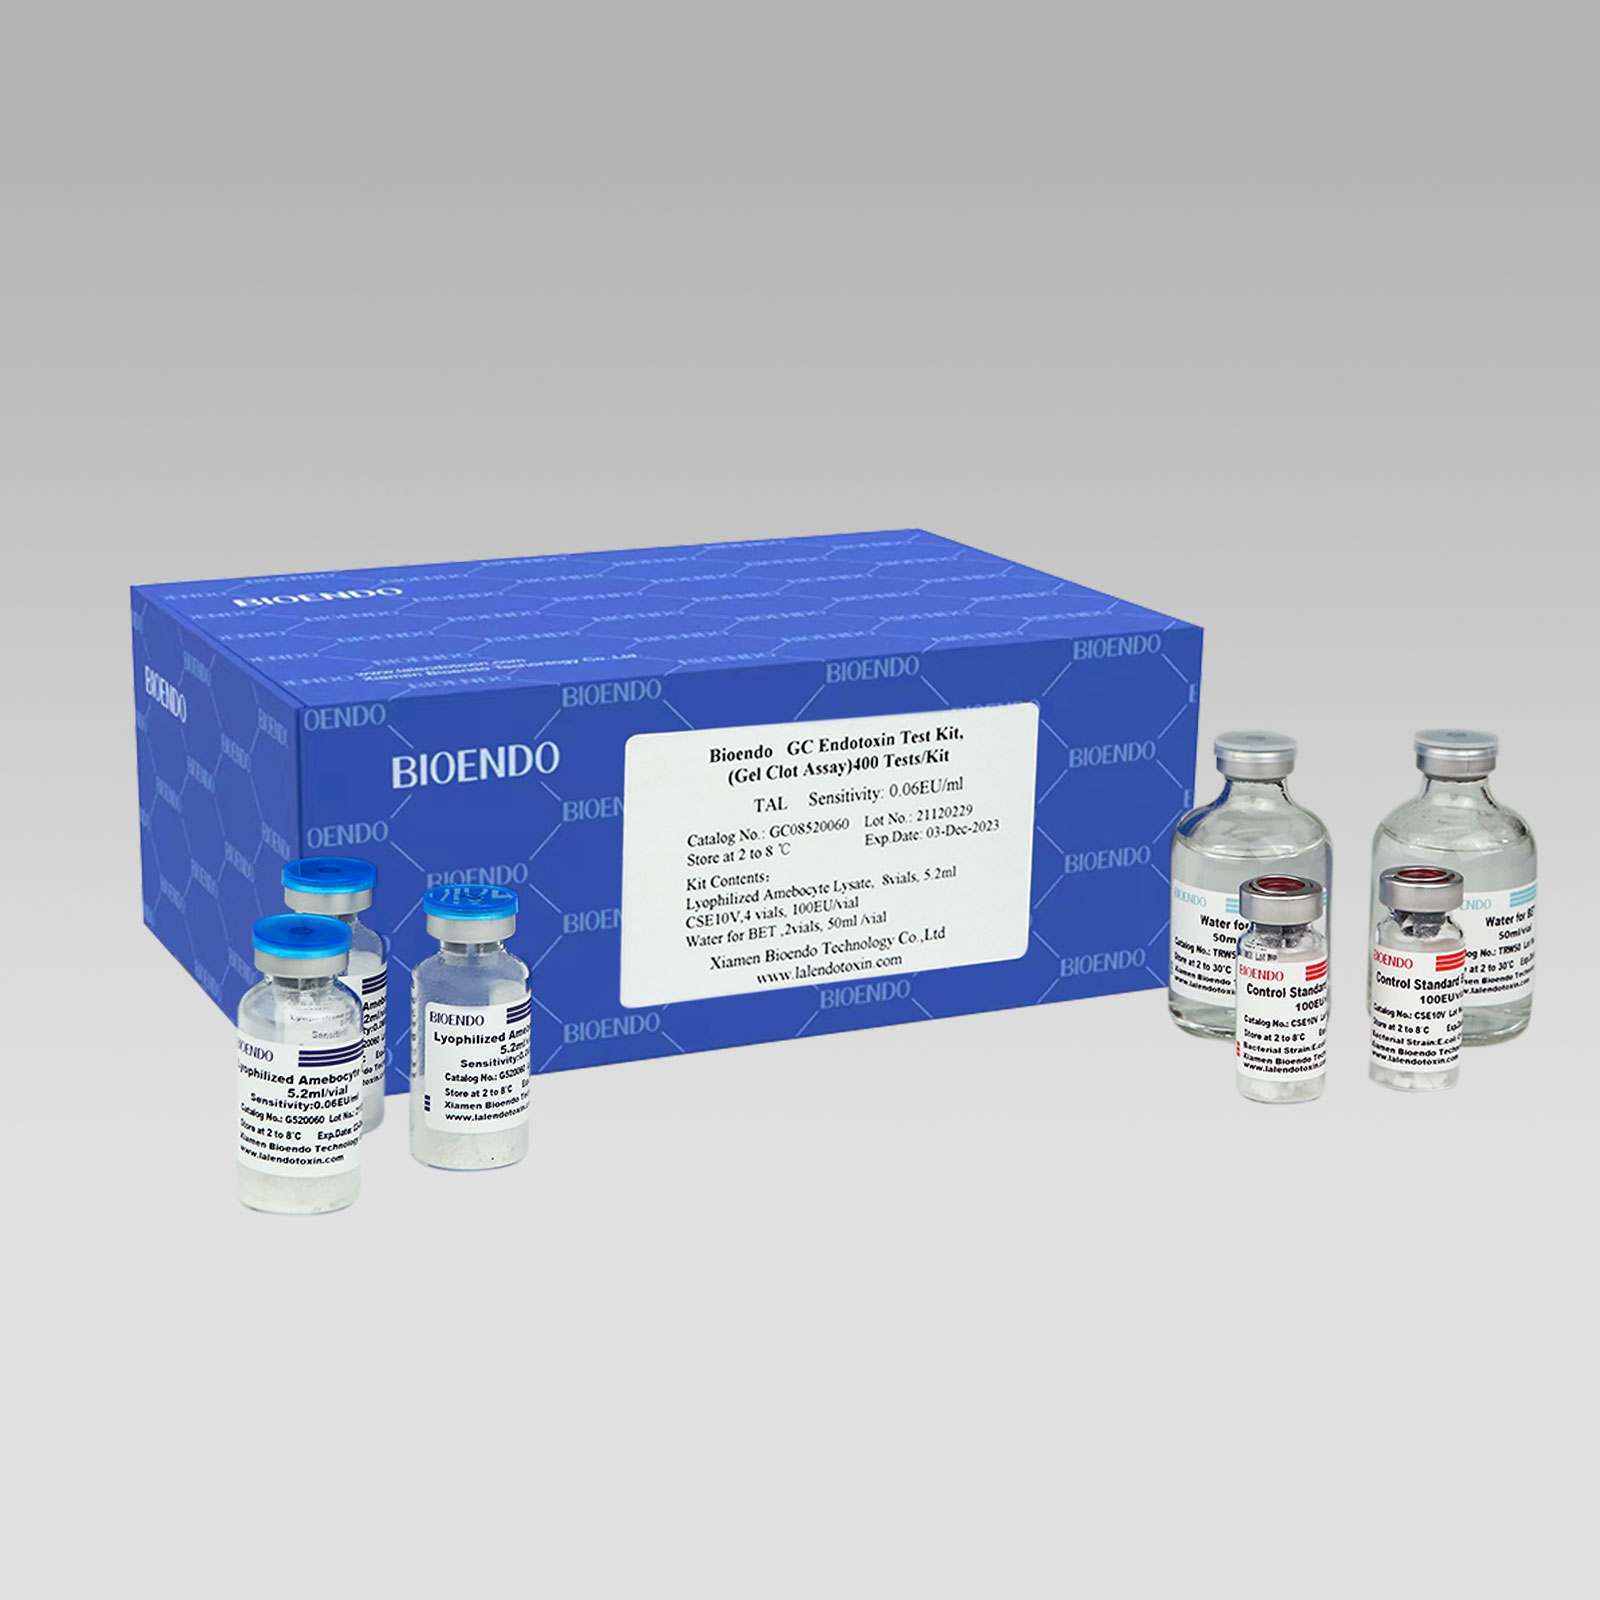 Bioendo GC Endotoxin Test Kit (Gel Clot Assay) Featured Image